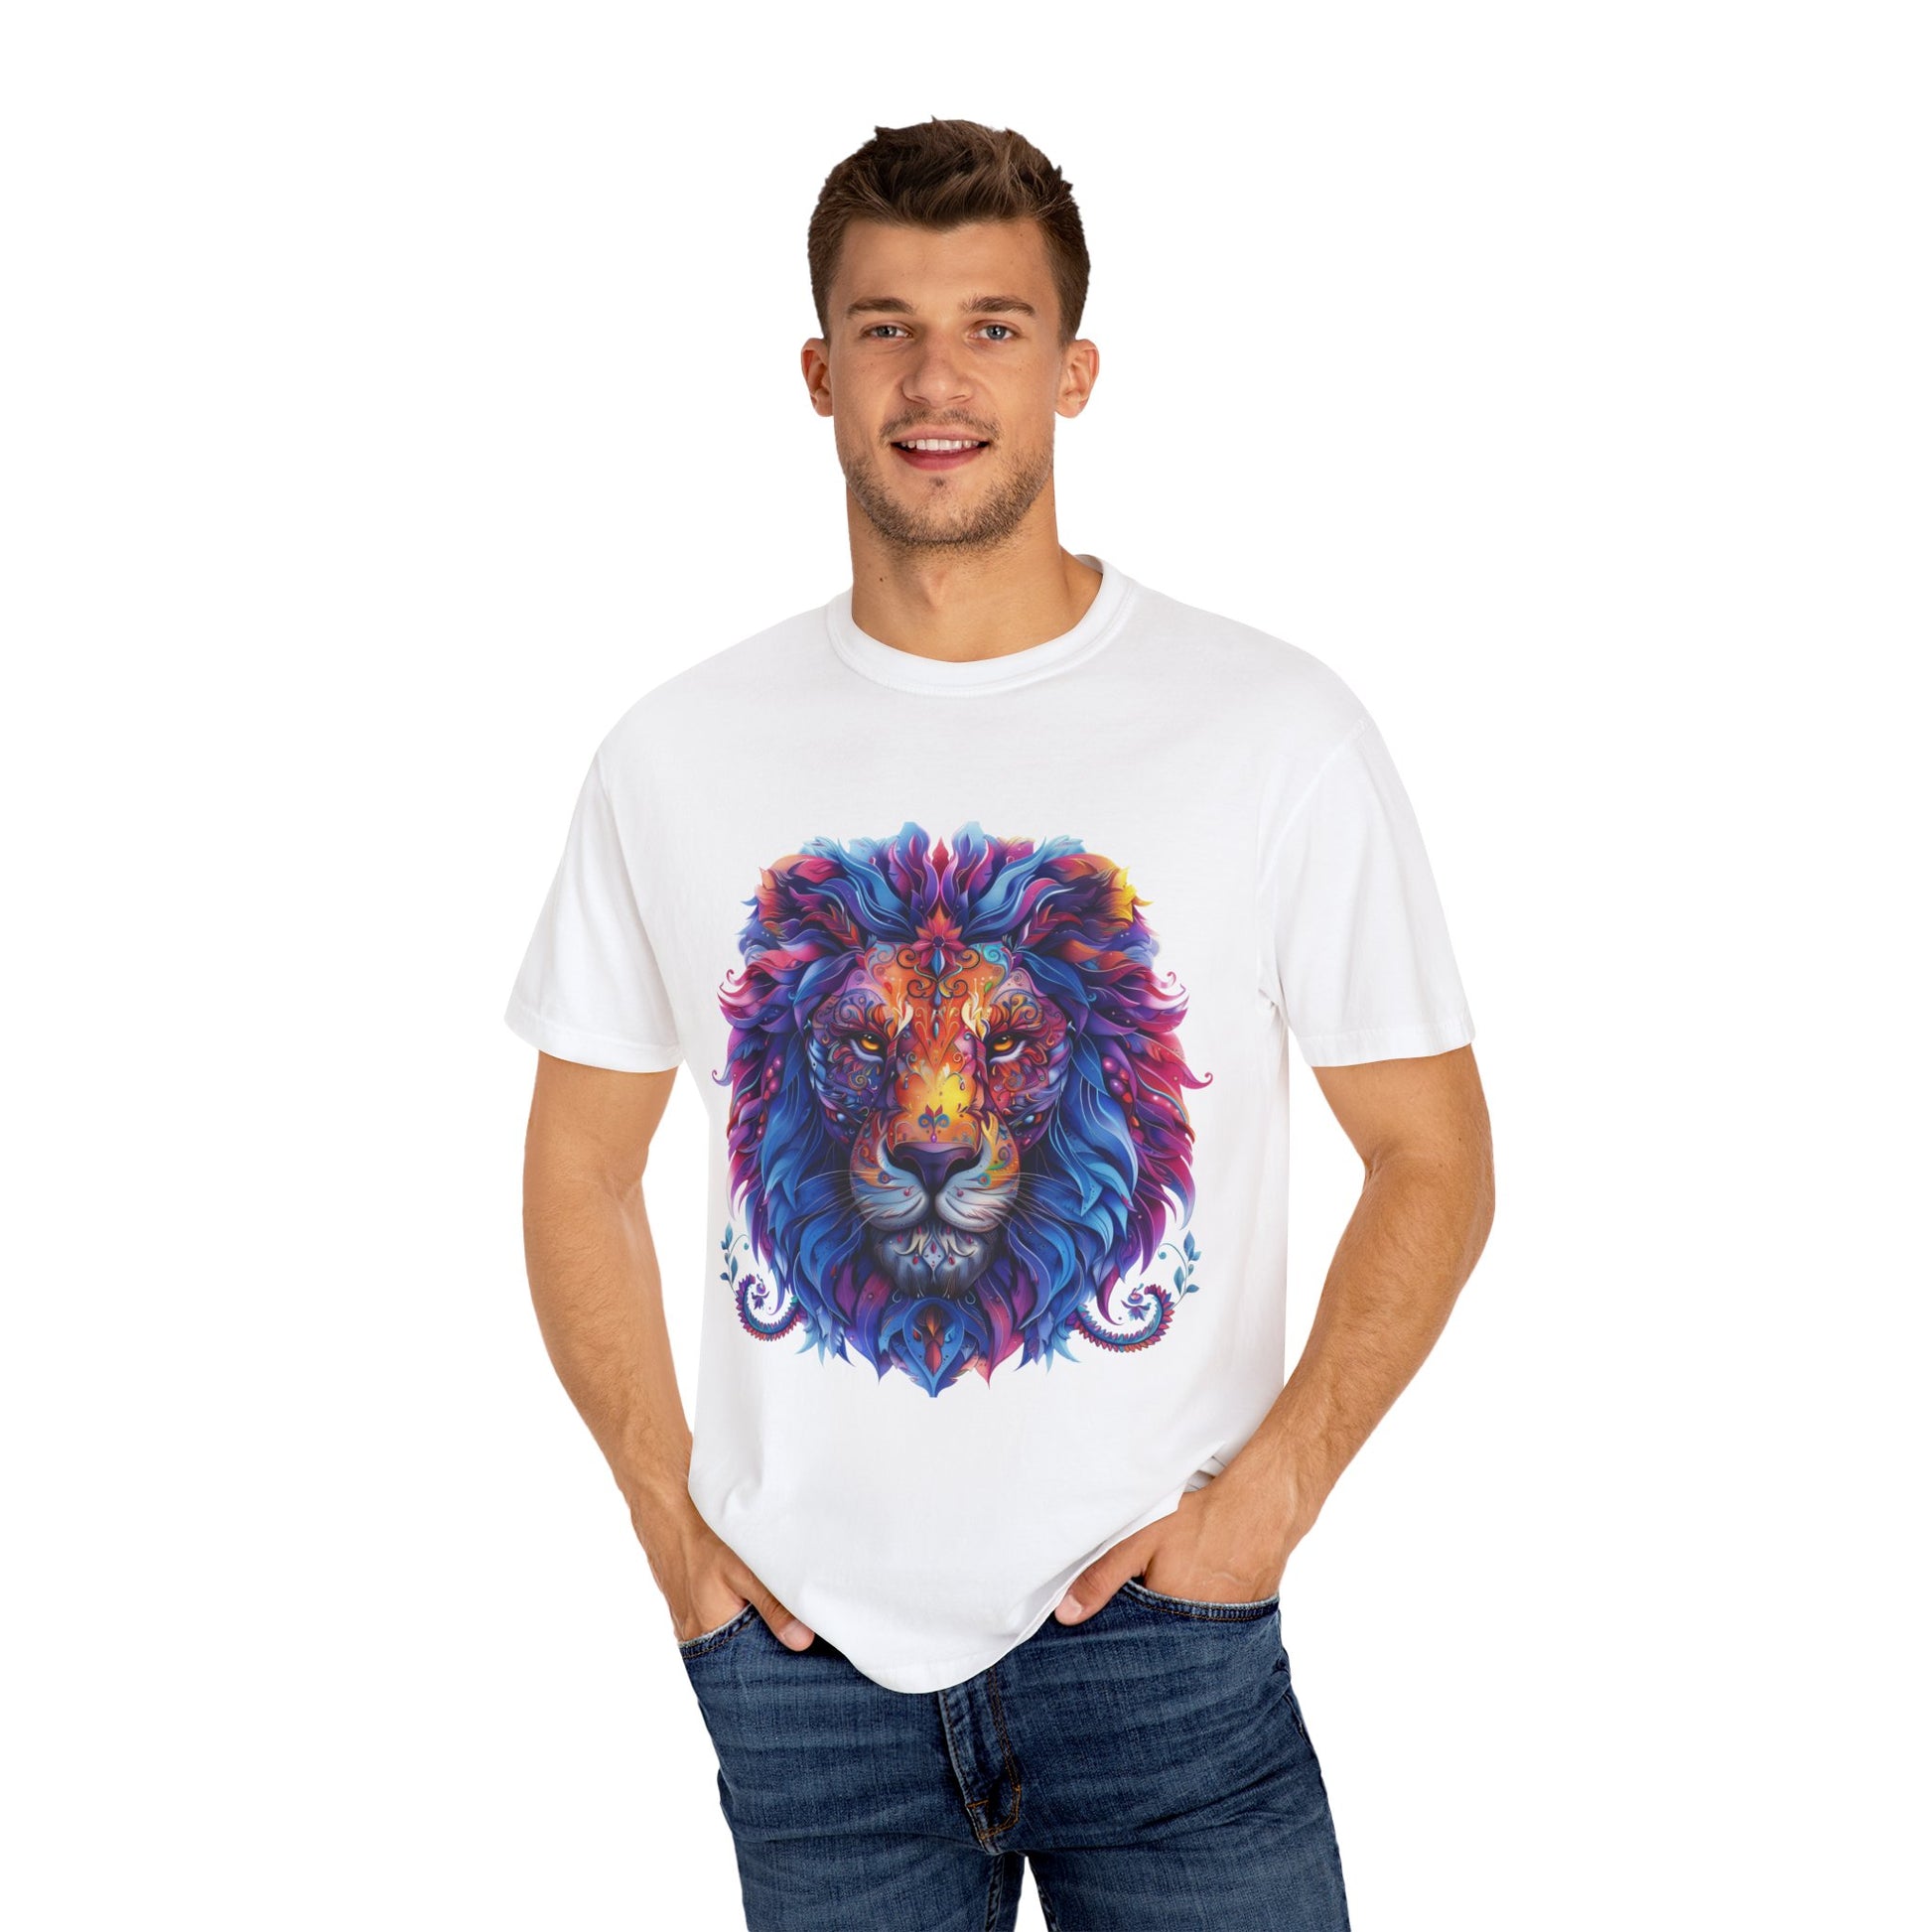 Lion Head Cool Graphic Design Novelty Unisex Garment-dyed T-shirt Cotton Funny Humorous Graphic Soft Premium Unisex Men Women White T-shirt Birthday Gift-24